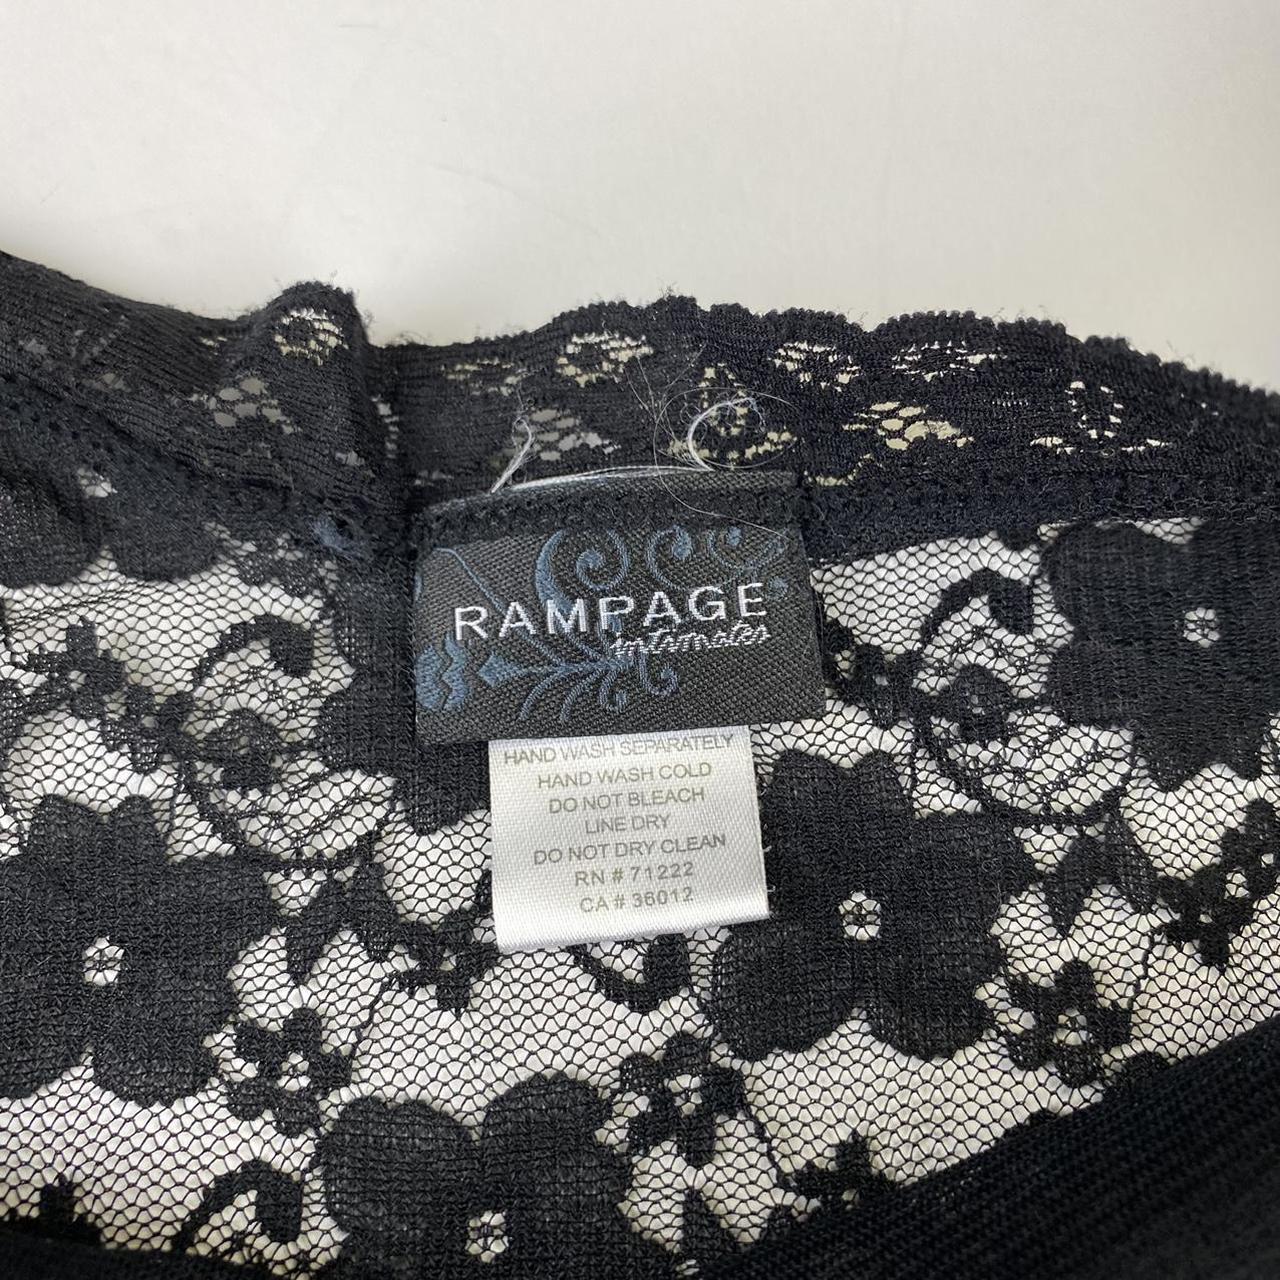 Rampage Women's Black Vests-tanks-camis (2)